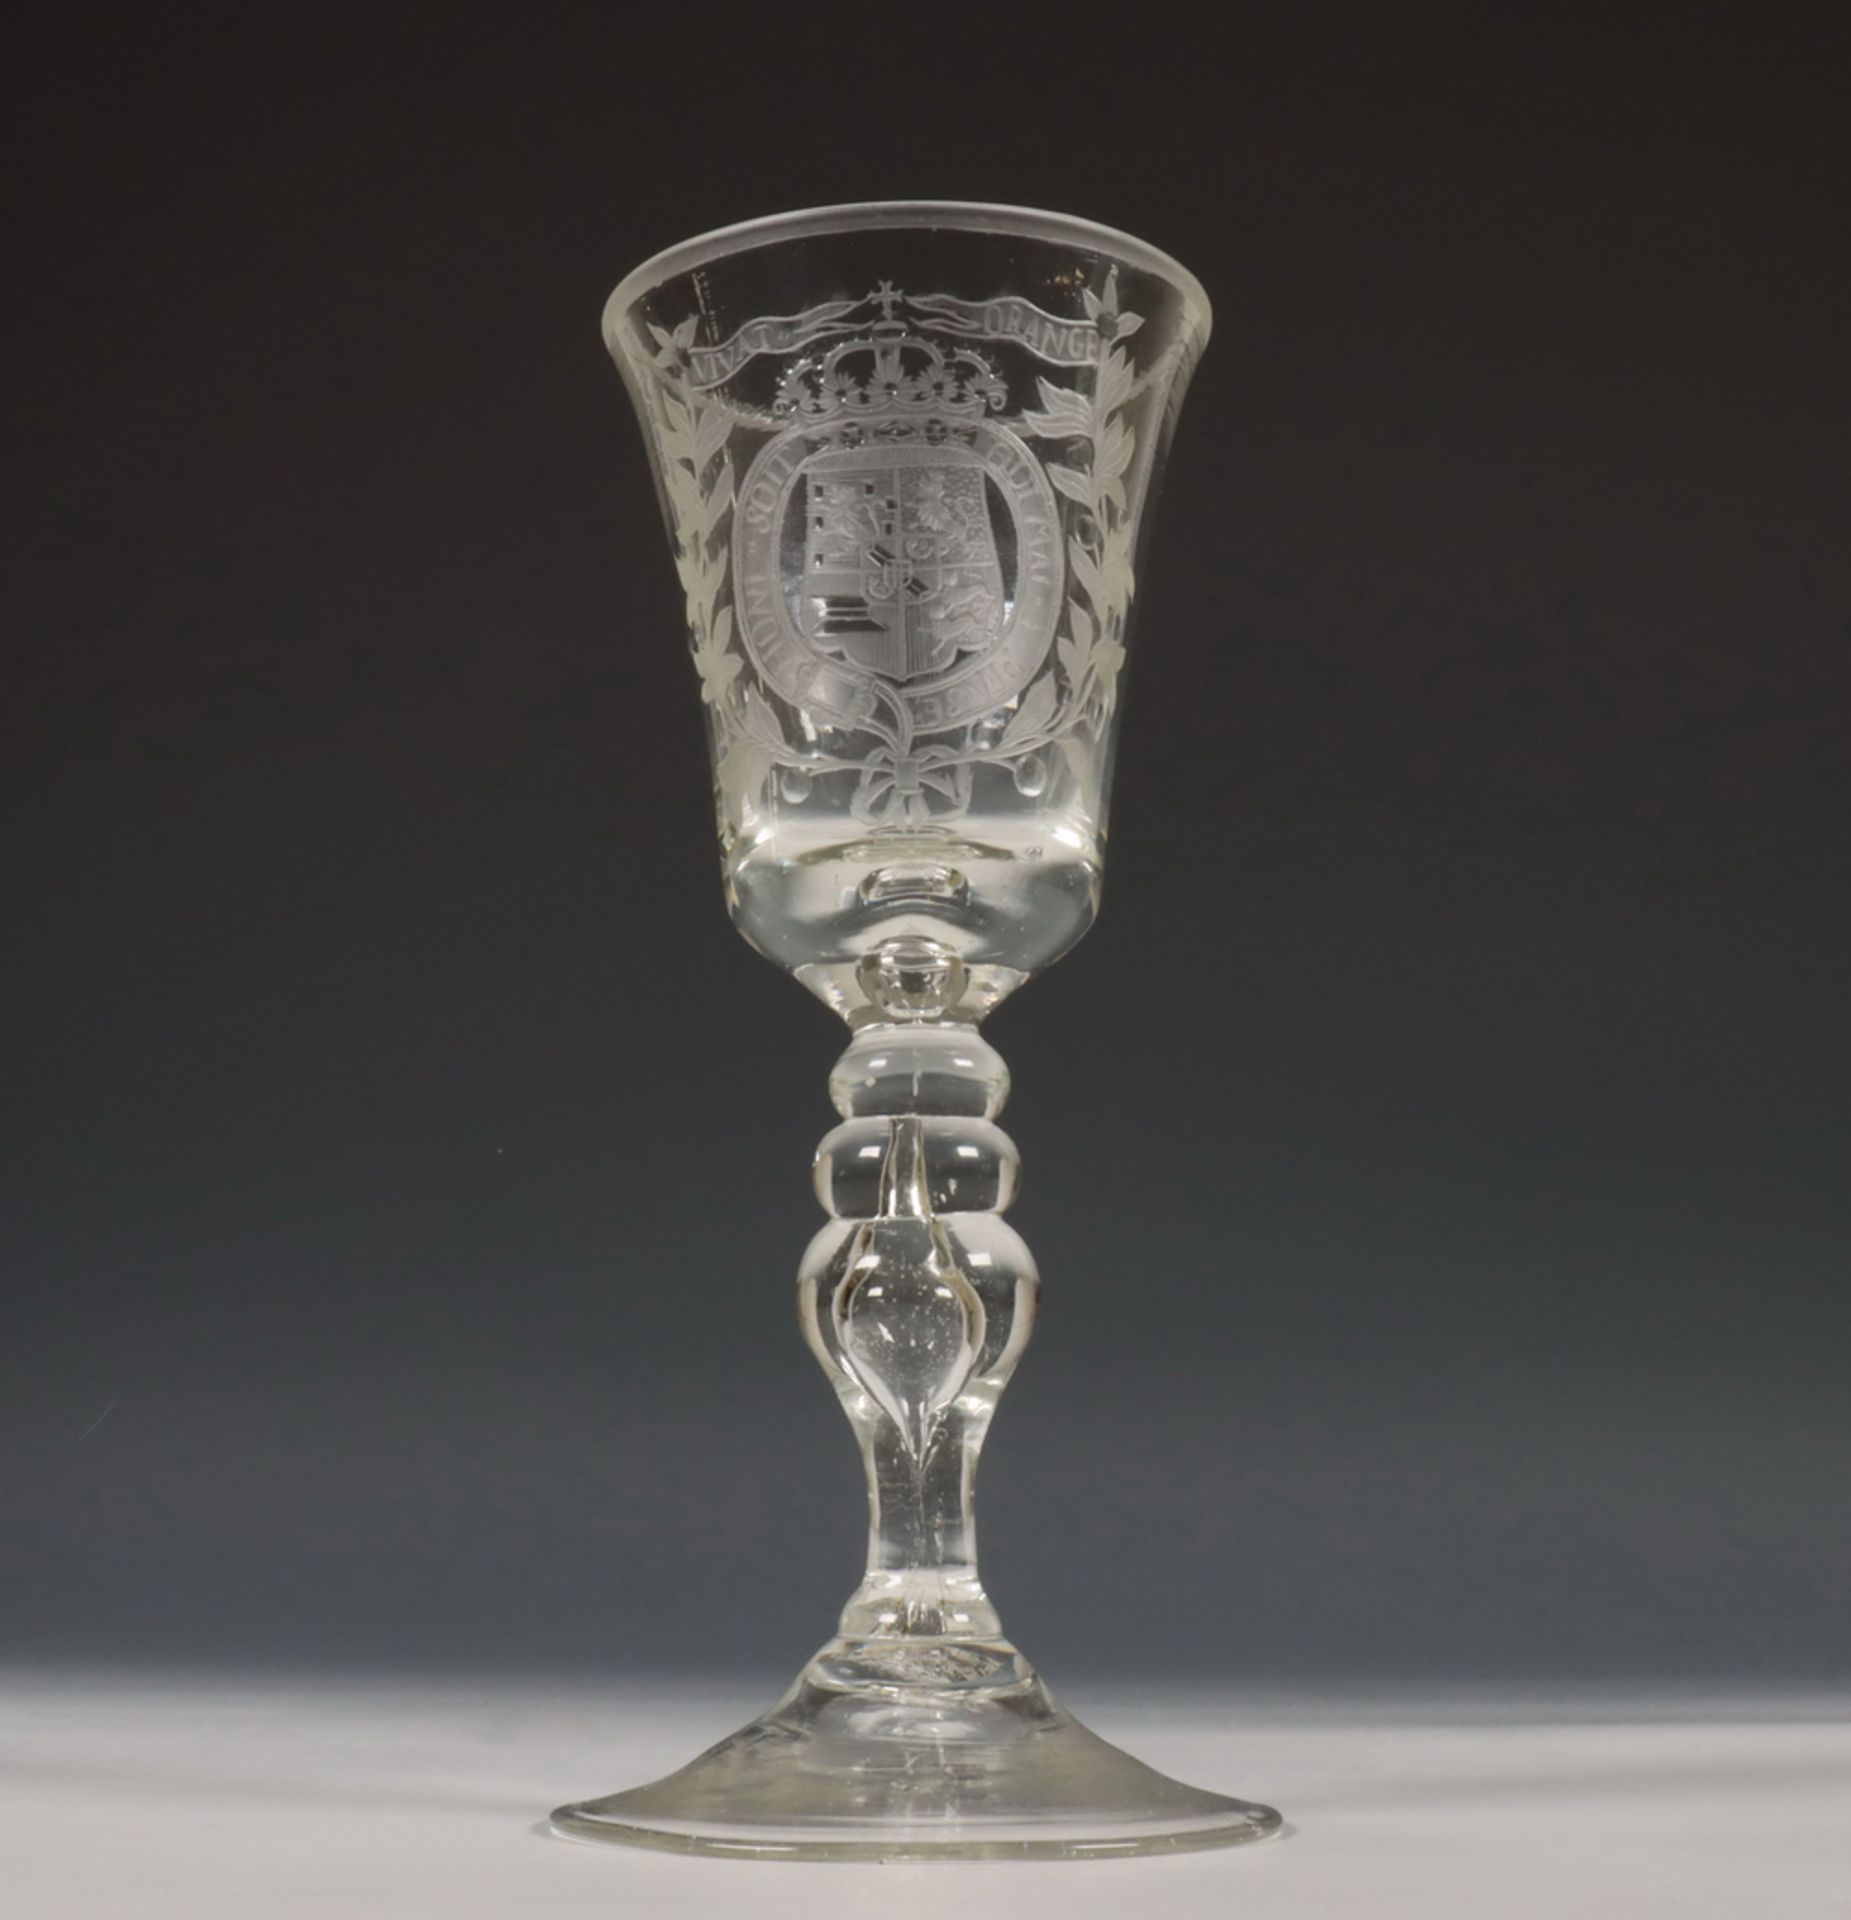 Duitsland, wapenglas -krijtglas- , midden 18e eeuw, - Bild 2 aus 2